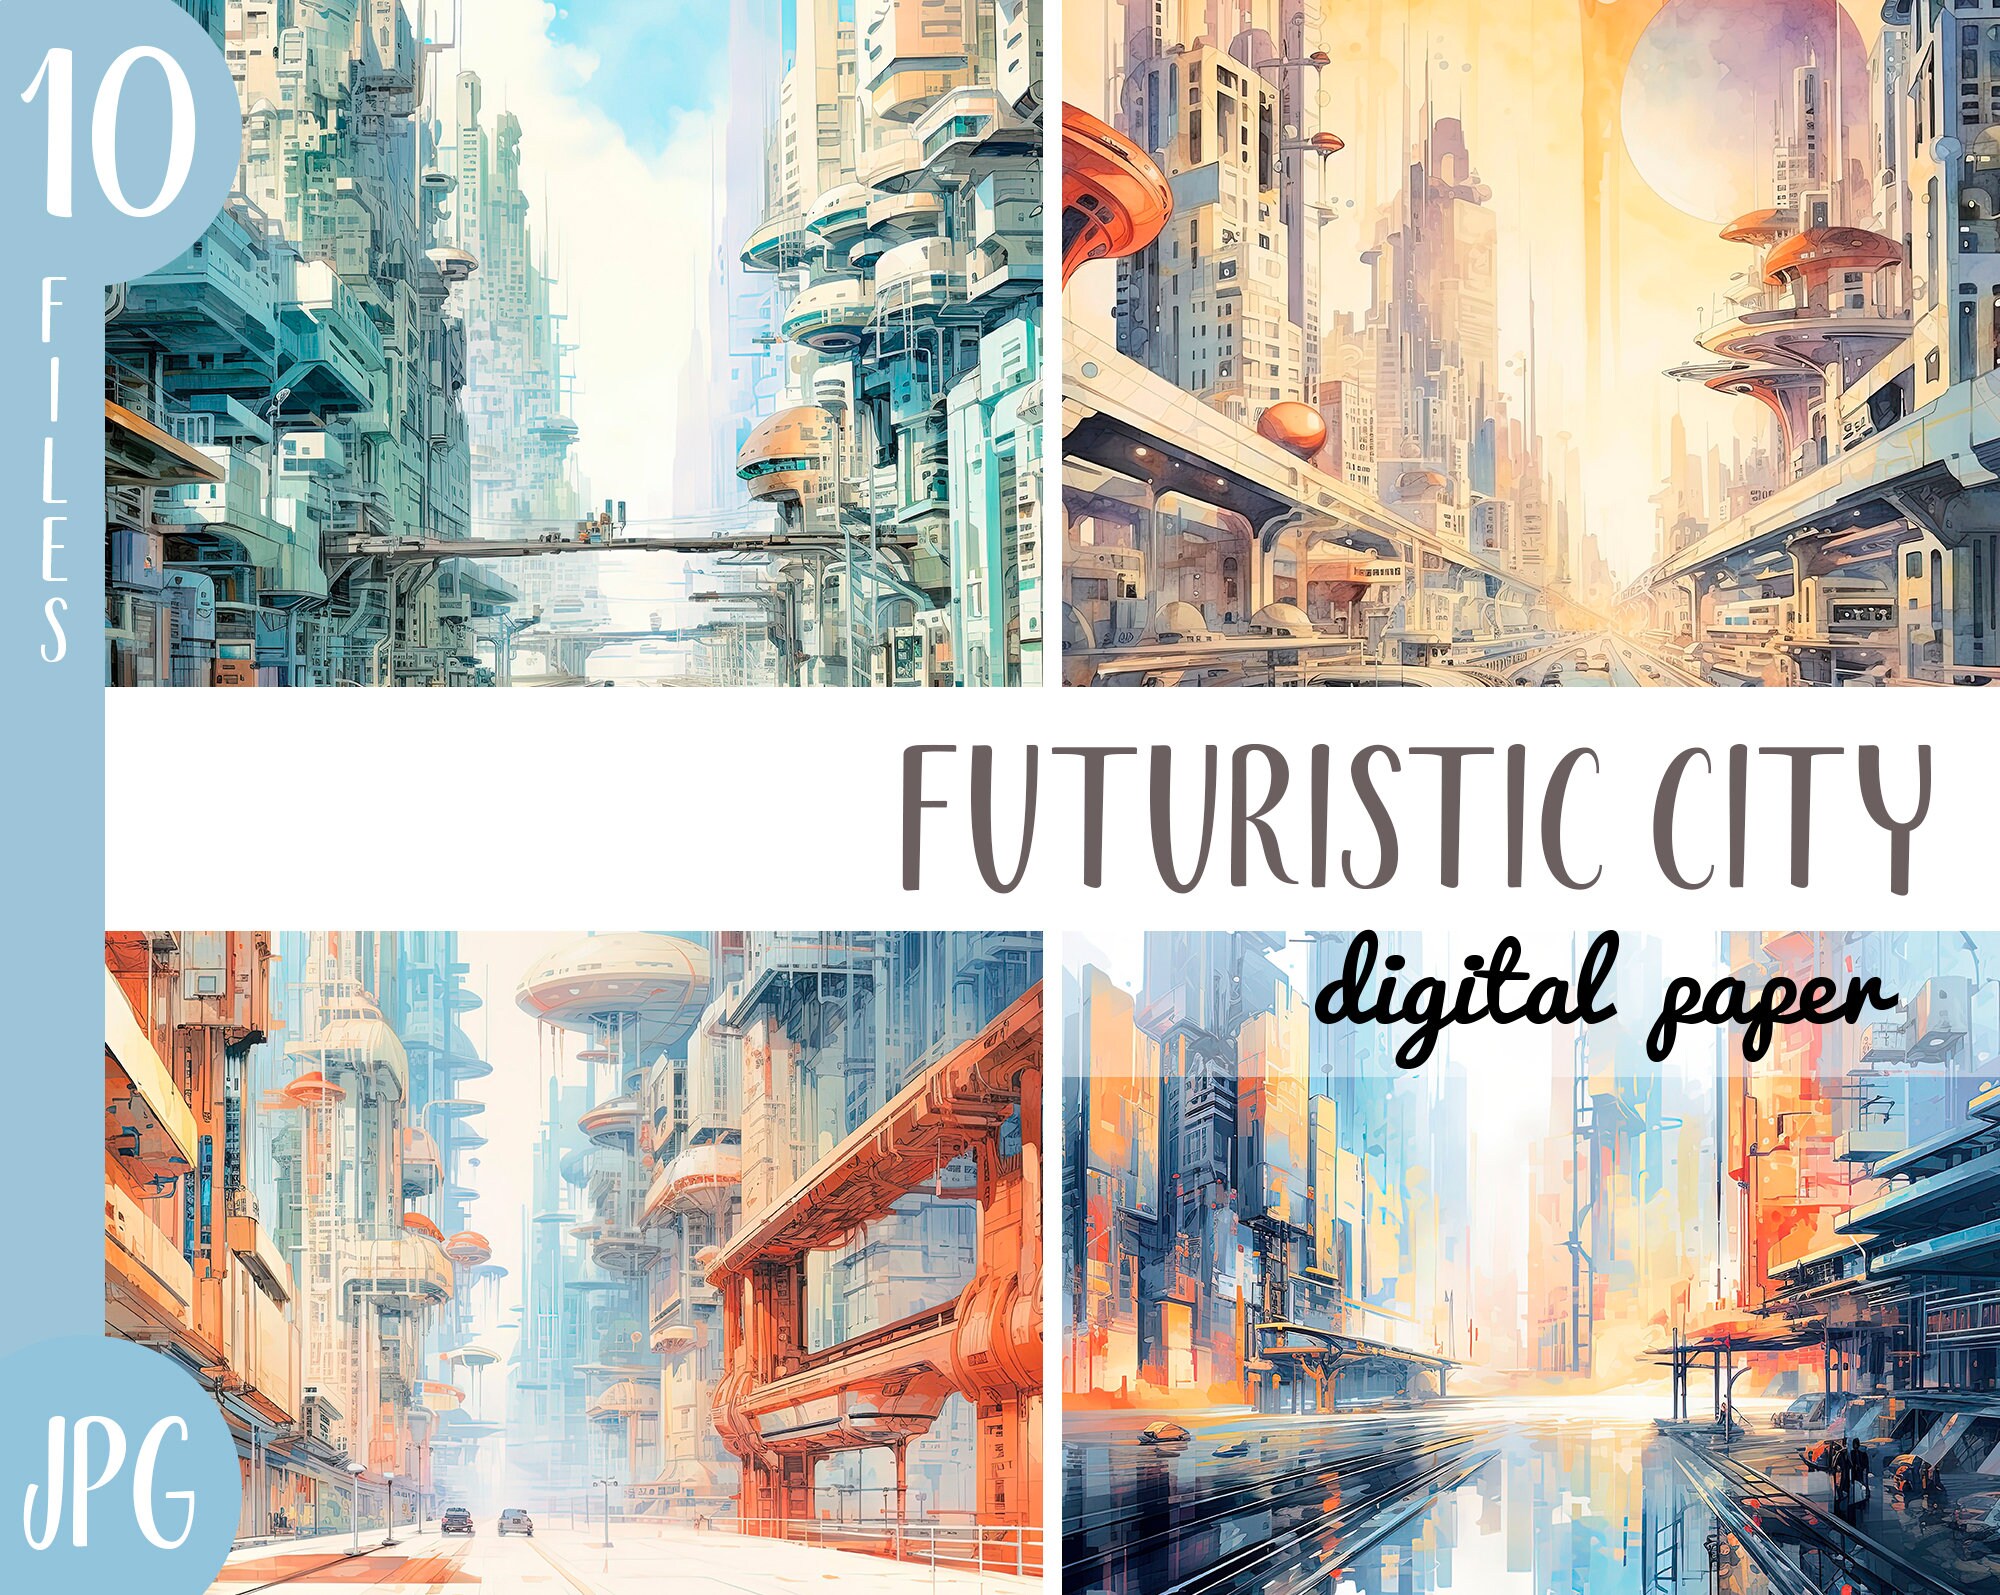 Premium Photo  Cyberpunk cityscape futurist illustration wallpaper massive  buildings with neon comic anime style digital abstract illustration